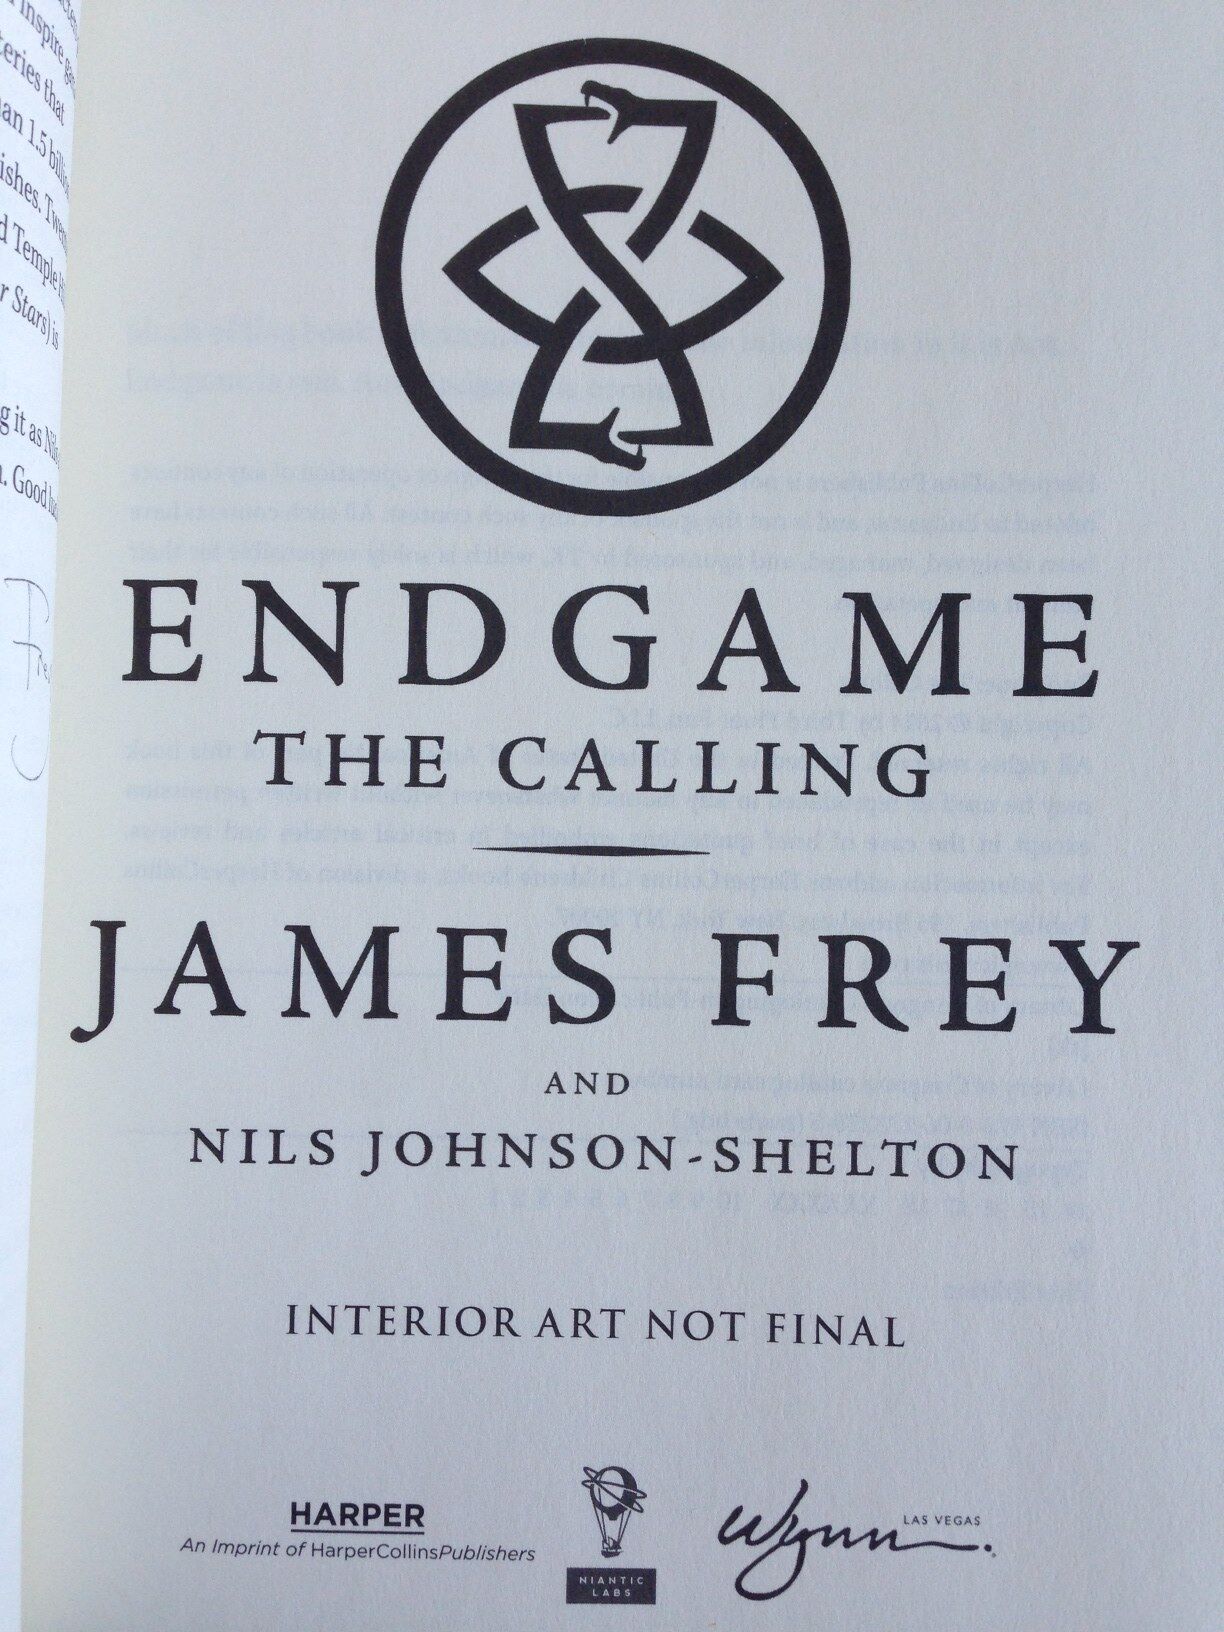 The Calling (Endgame #1) by James Frey – Parabatai Reviews